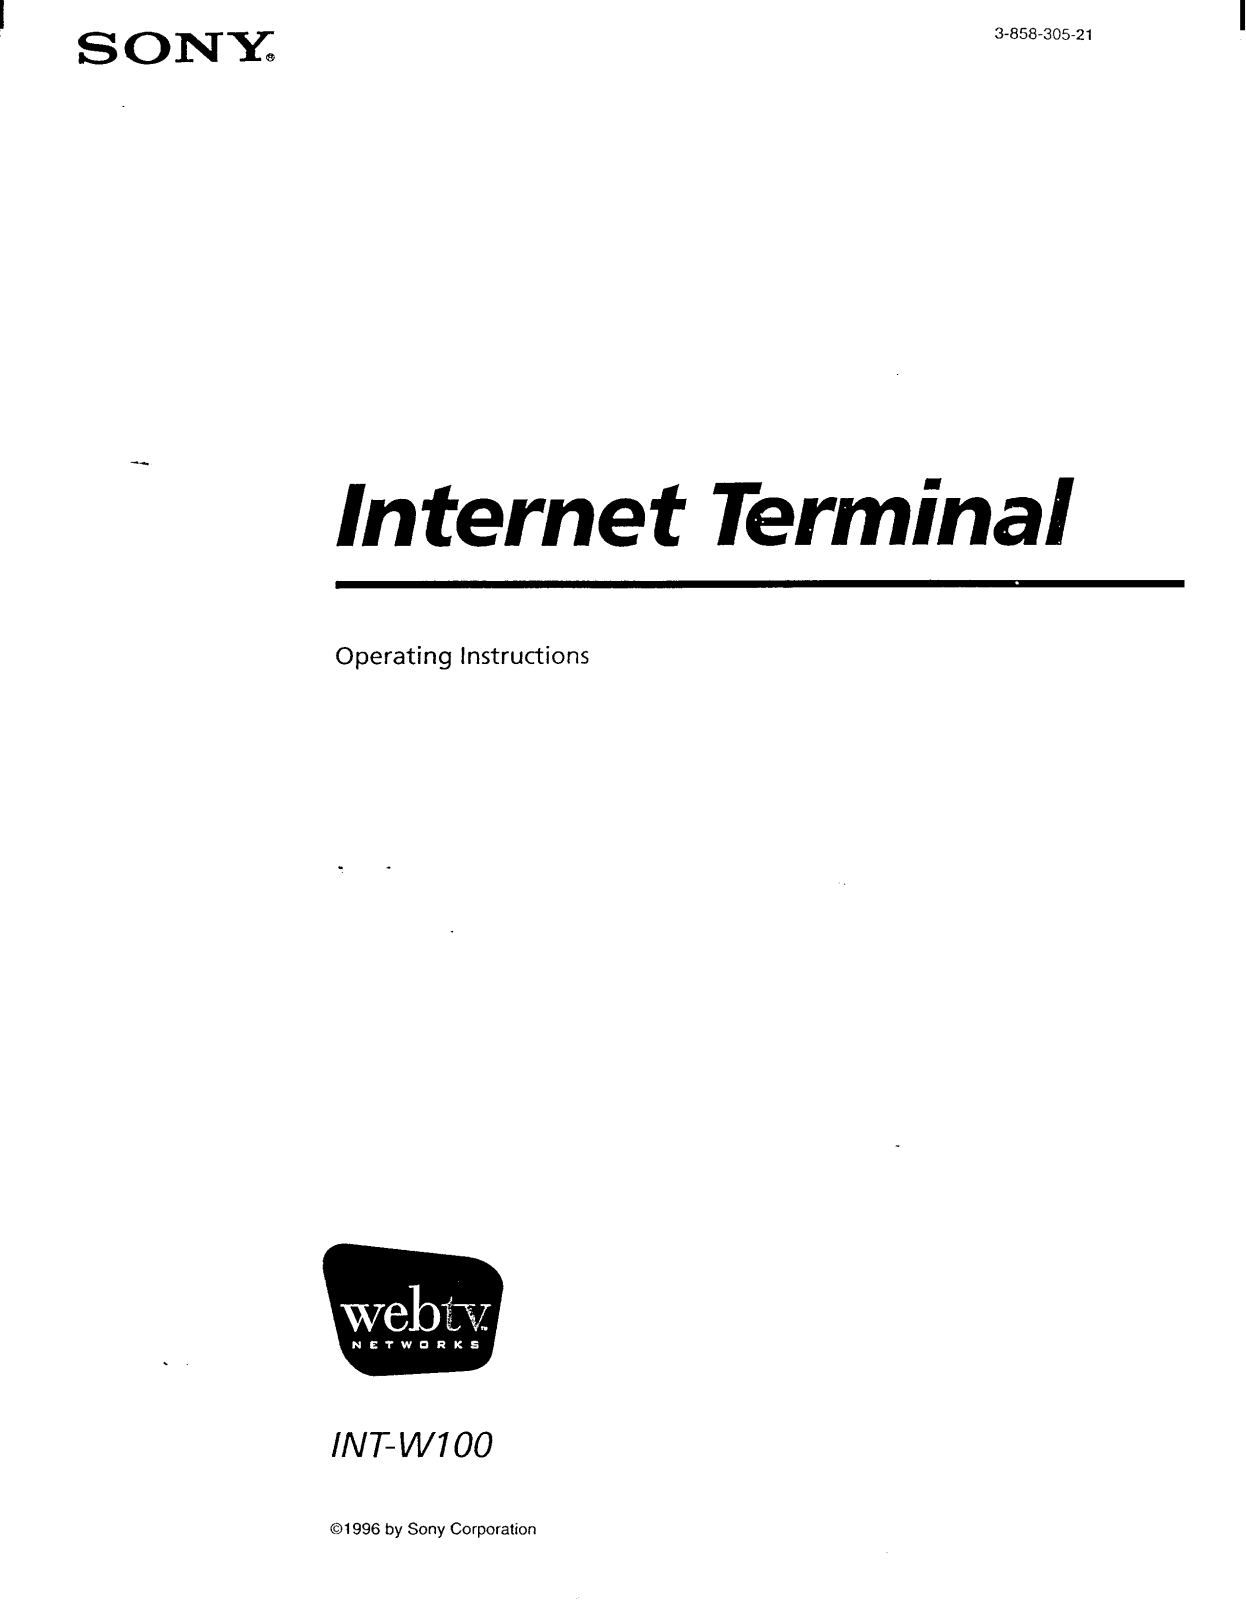 Sony Internet terminal User Manual